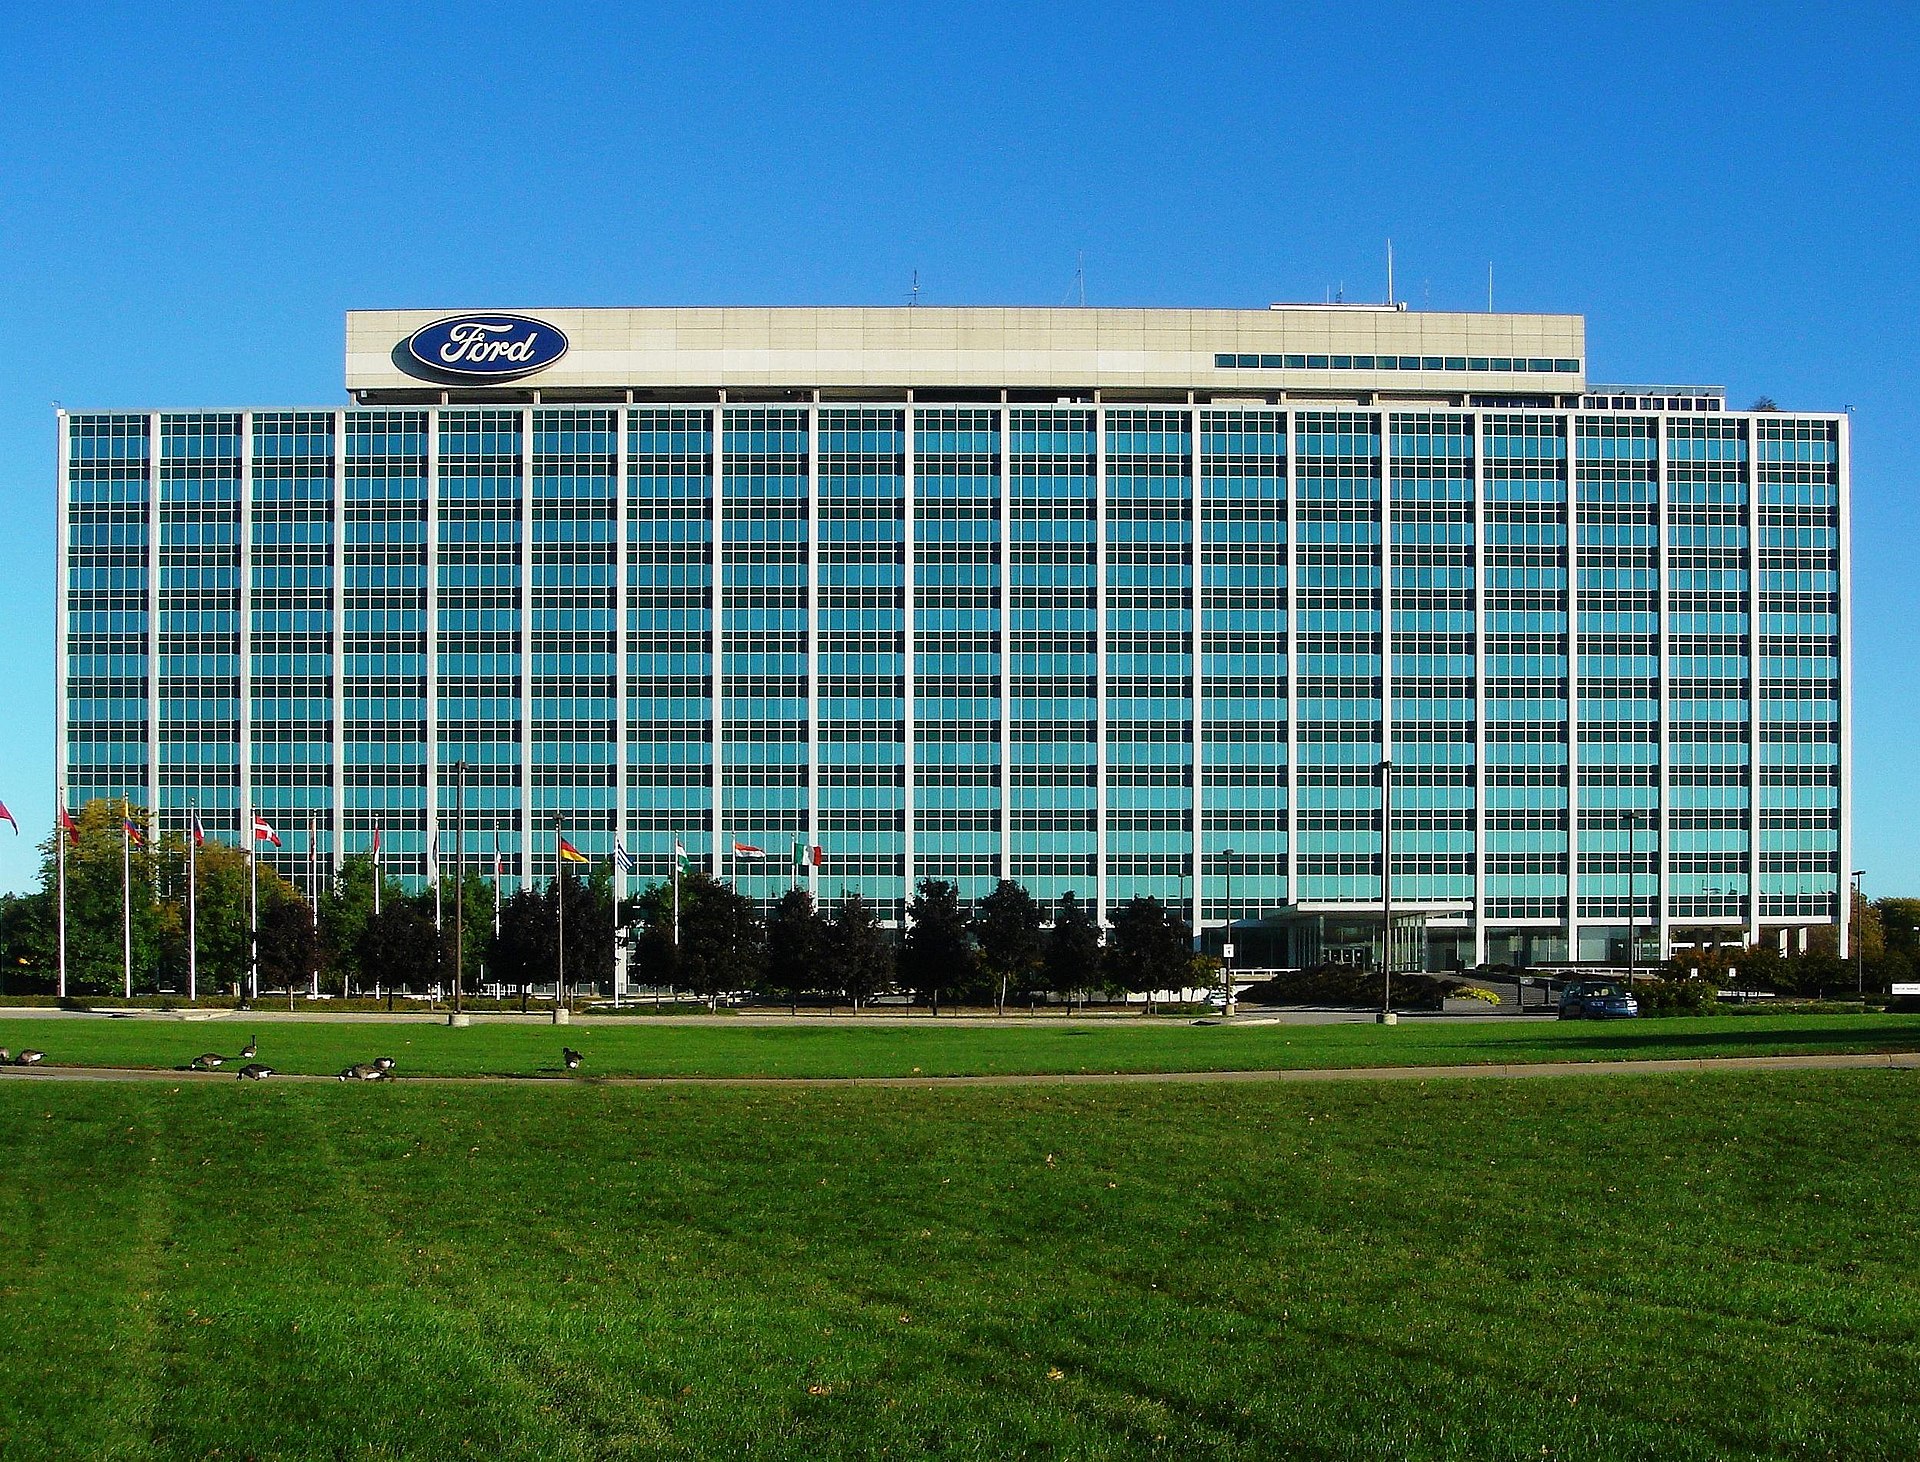 Ford Motor Company headquarters building in Dearborn, Michigan.